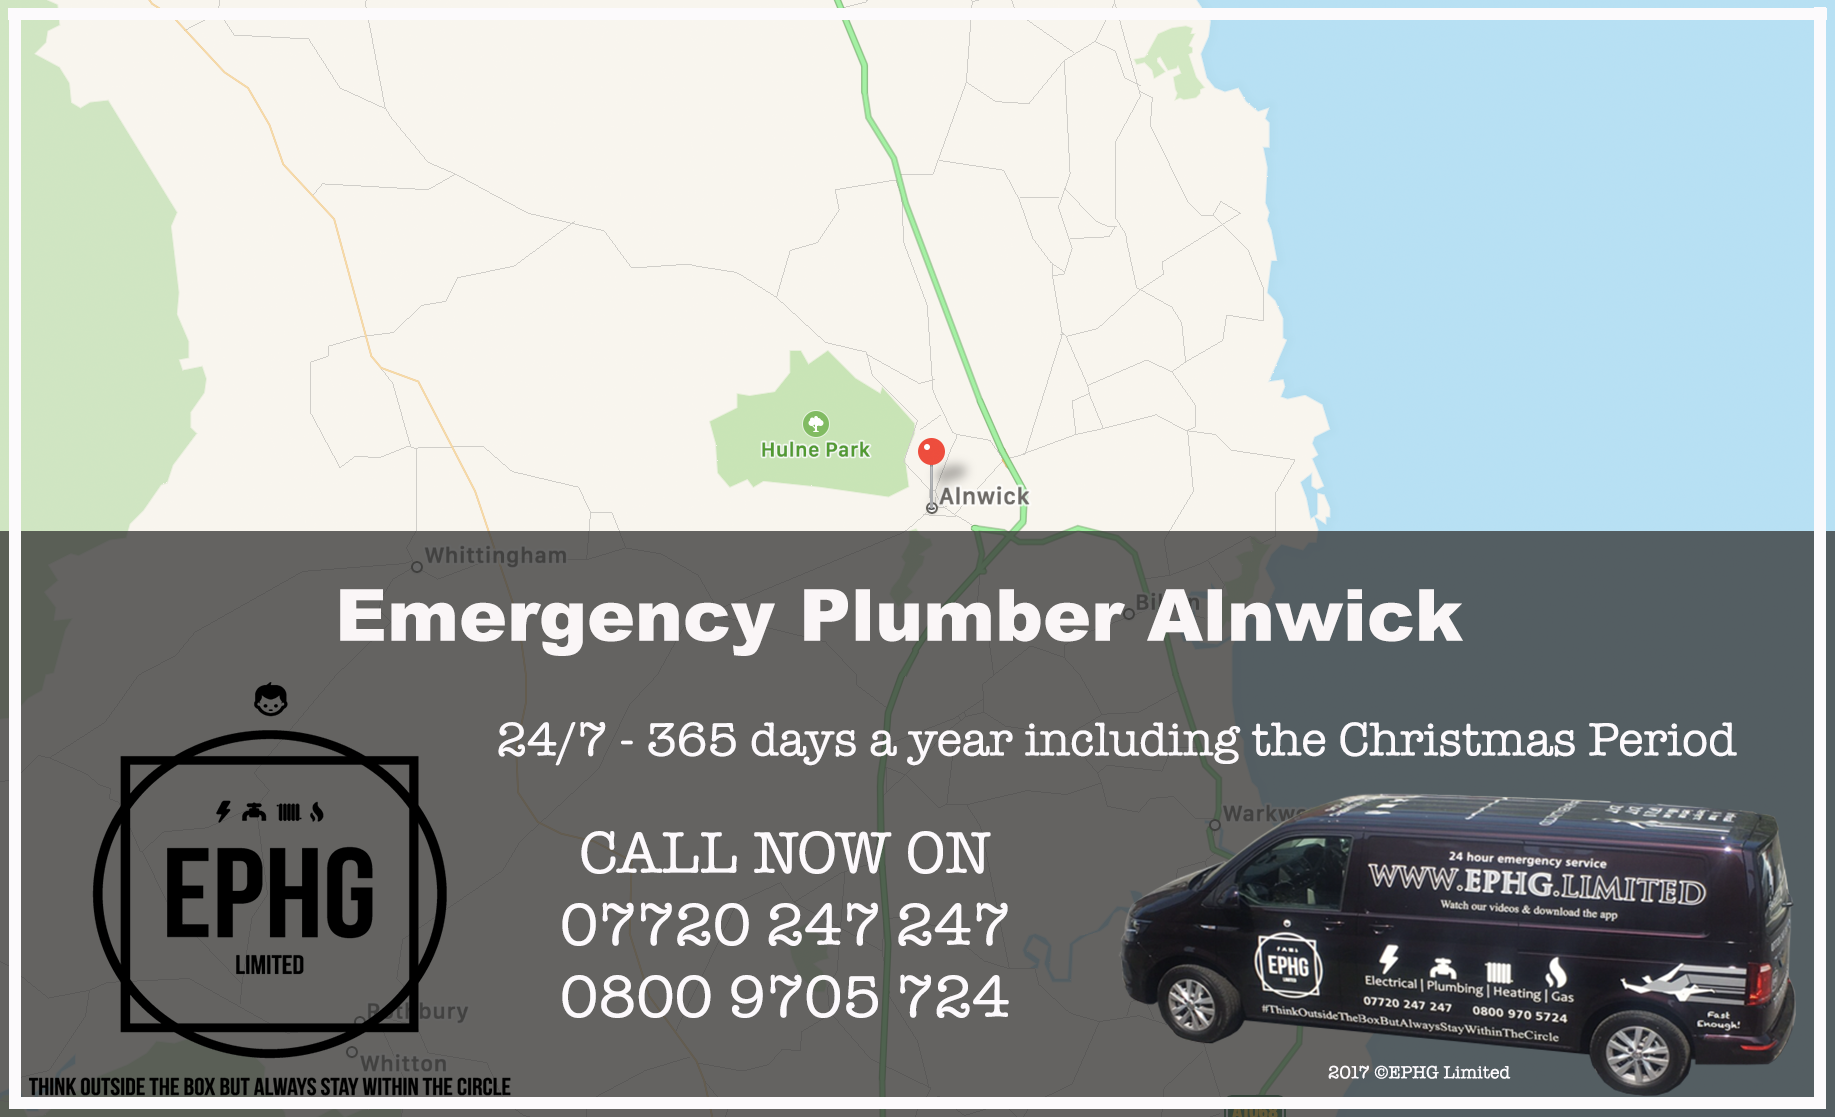 24 Hour Emergency Plumber Alnwick